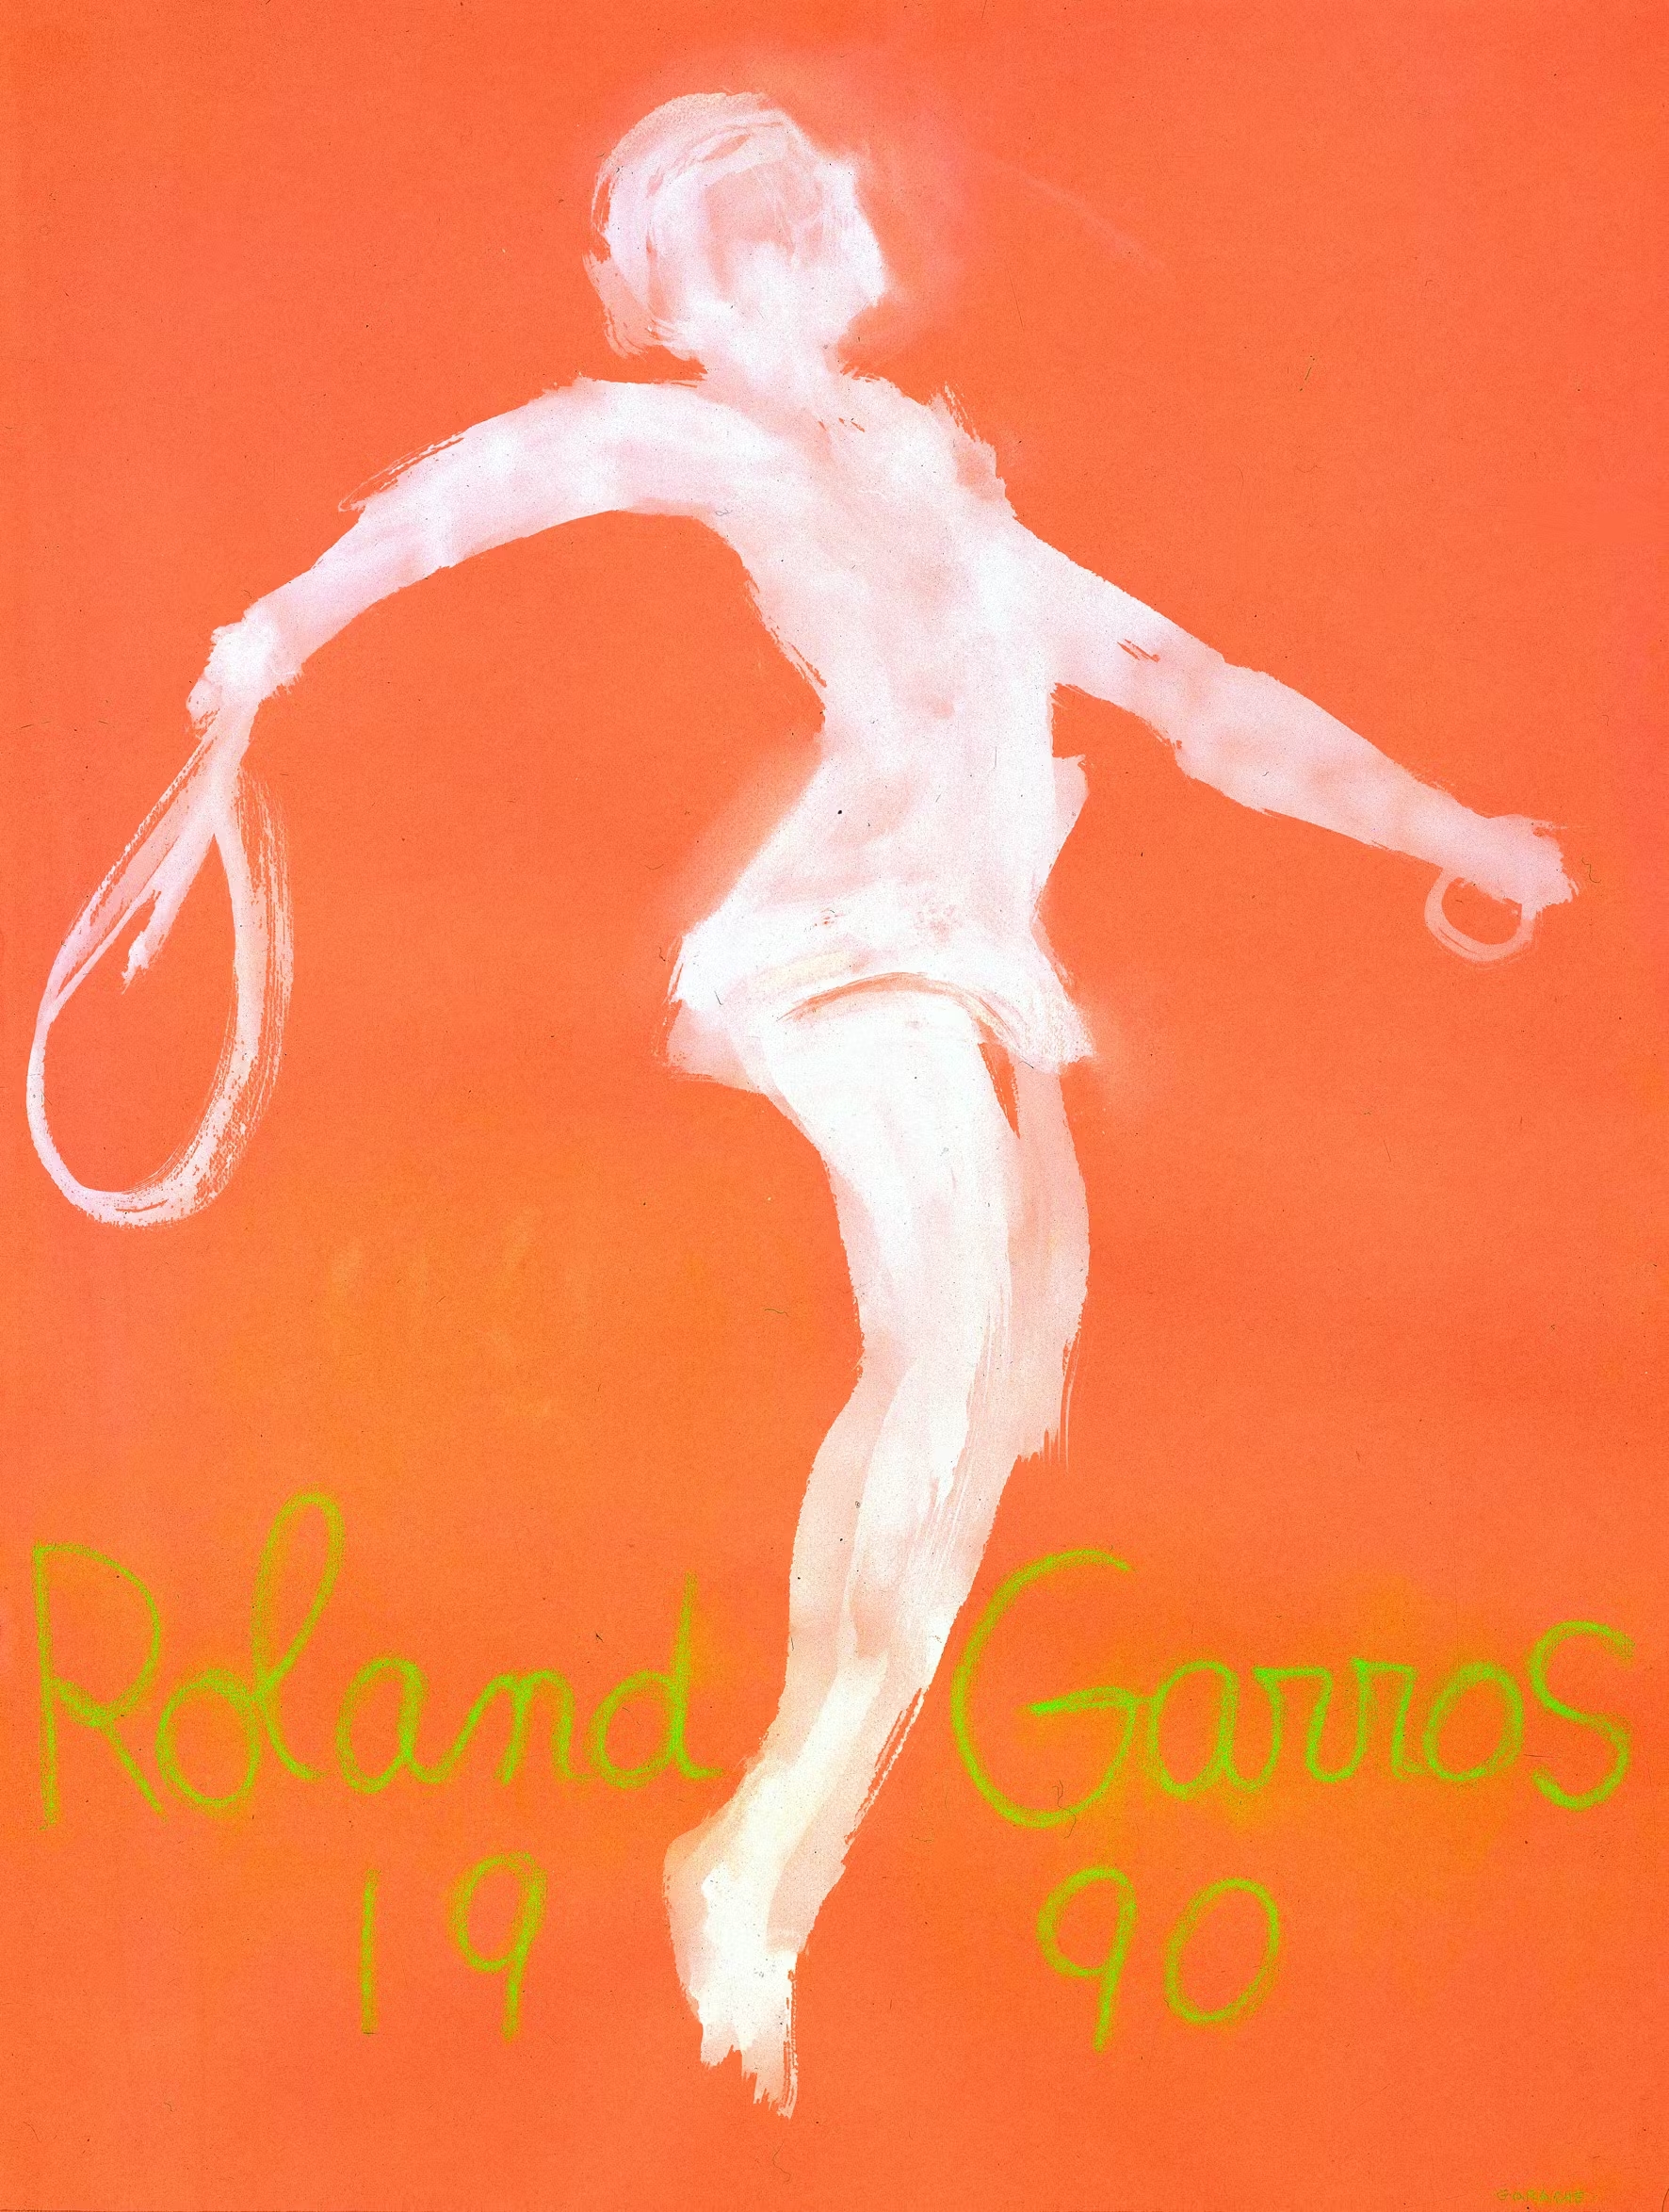 Roland Garros 1990 poster